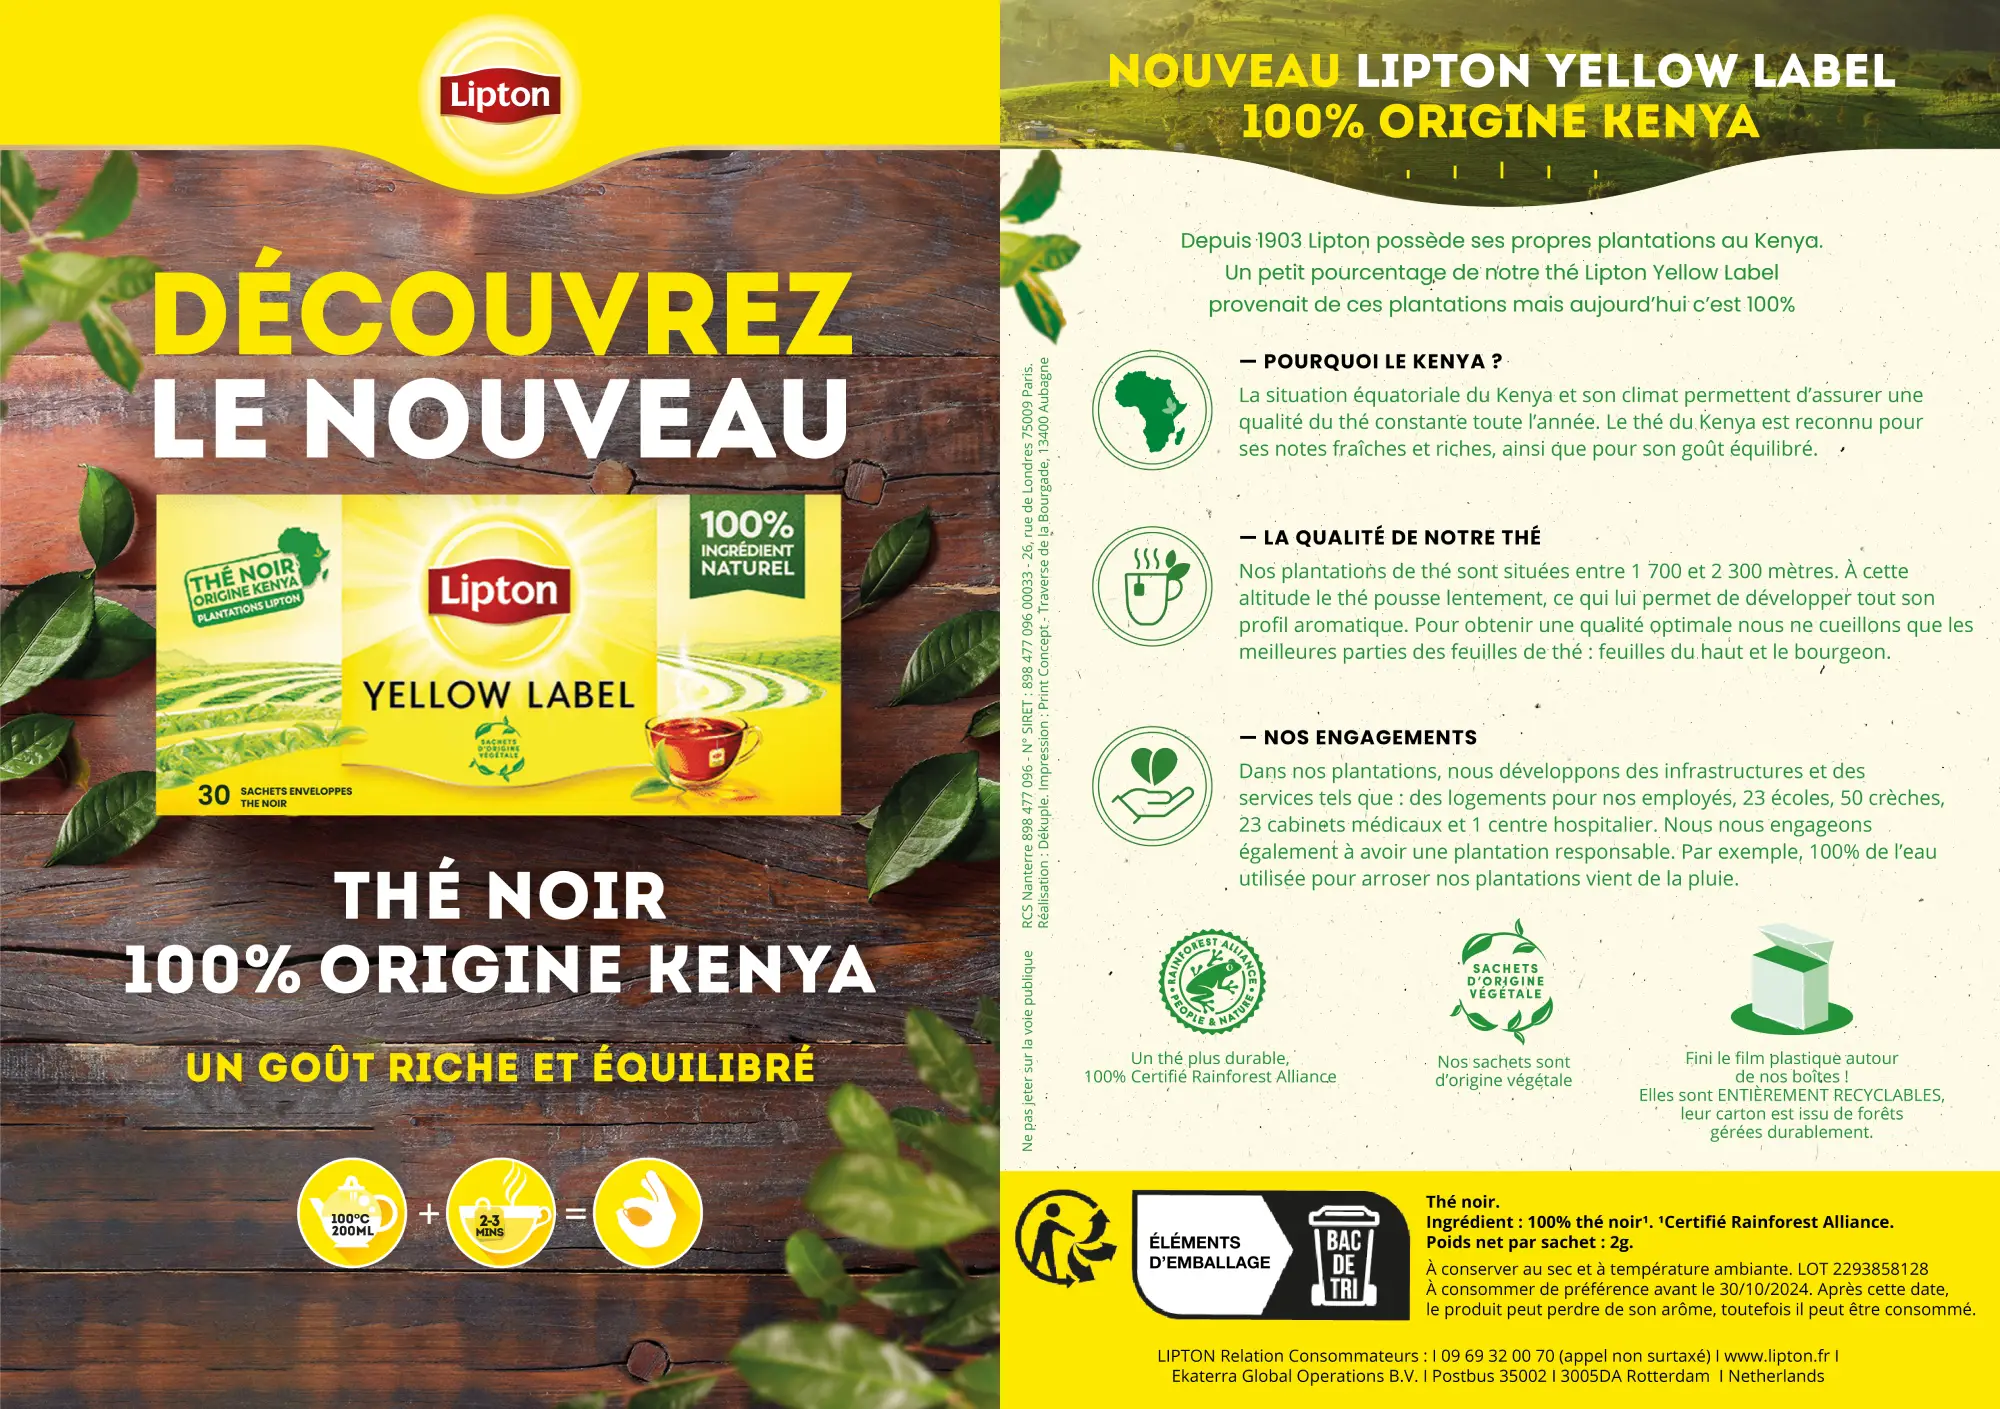 Aperçu du flyer de la campagne Lipton Yellow Label